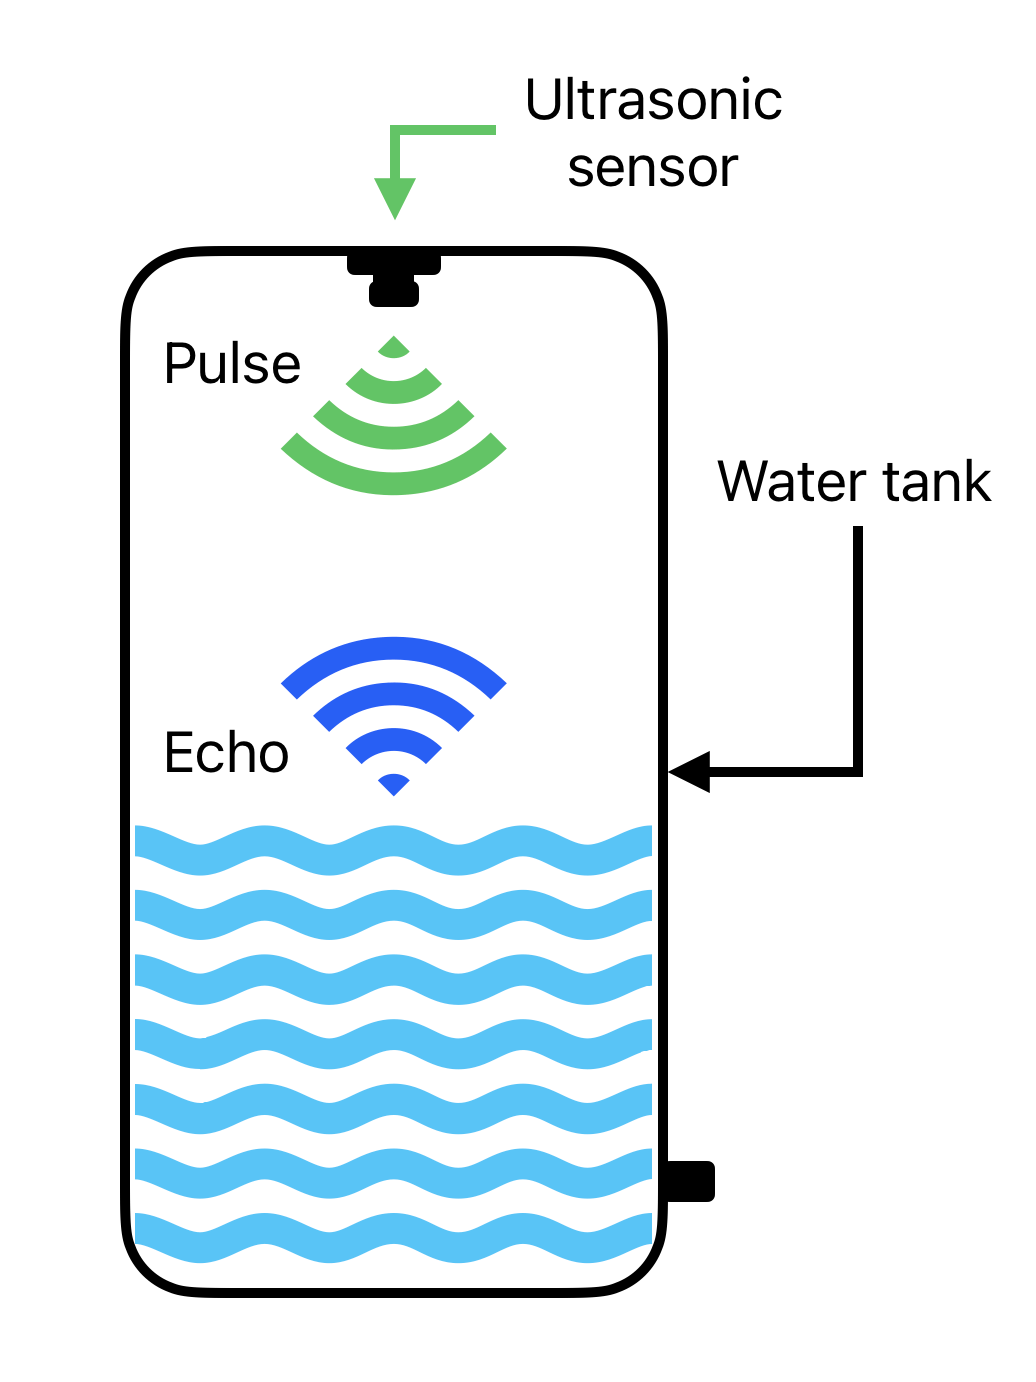 Illustration of an ultrasonic sensor.